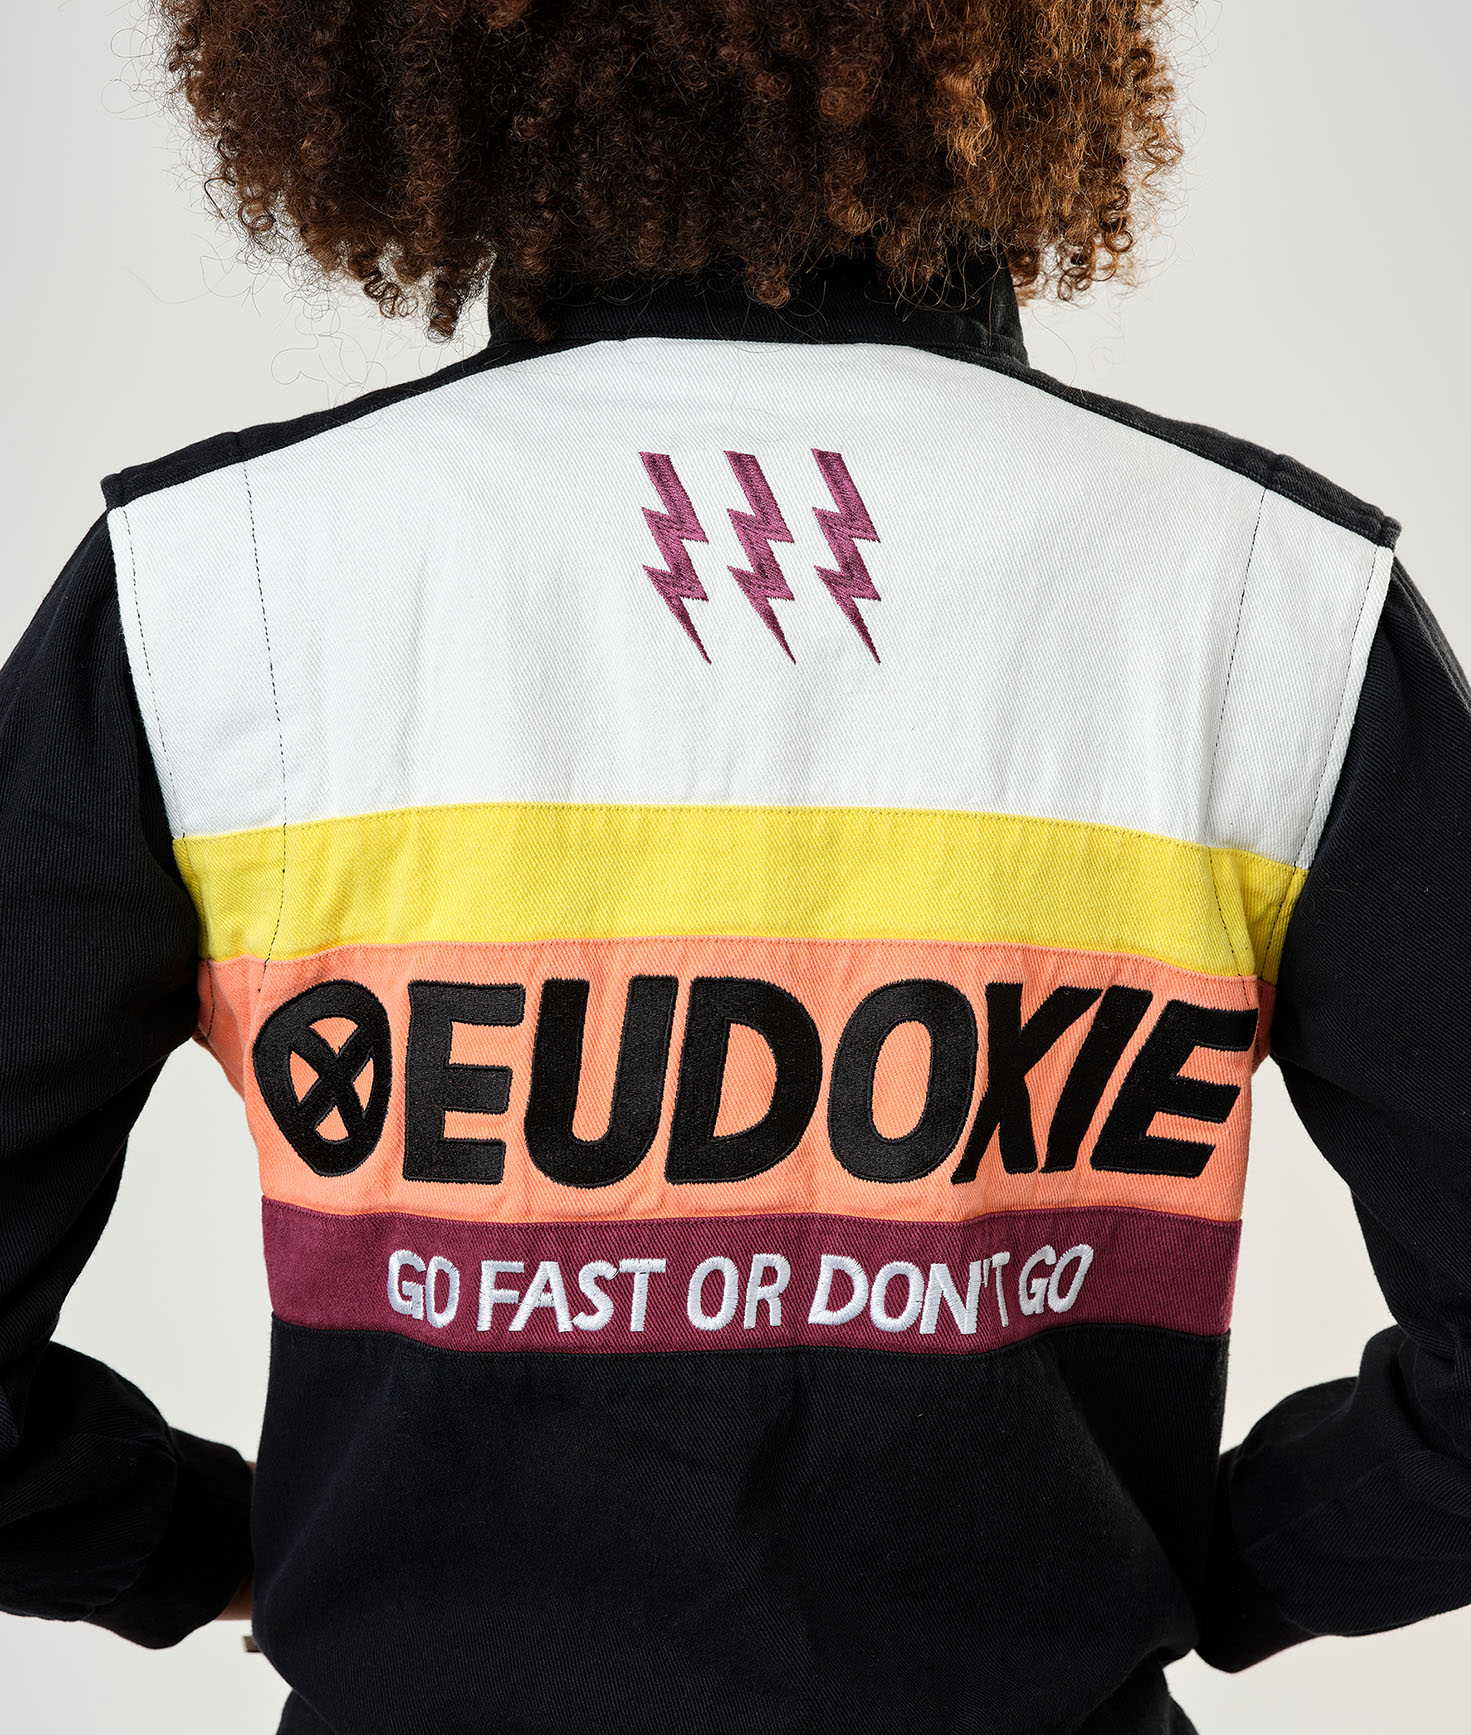 eudoxie-jacket-nascar-racing-femme-broderie-dégradé-vintage-go-fast.jpg